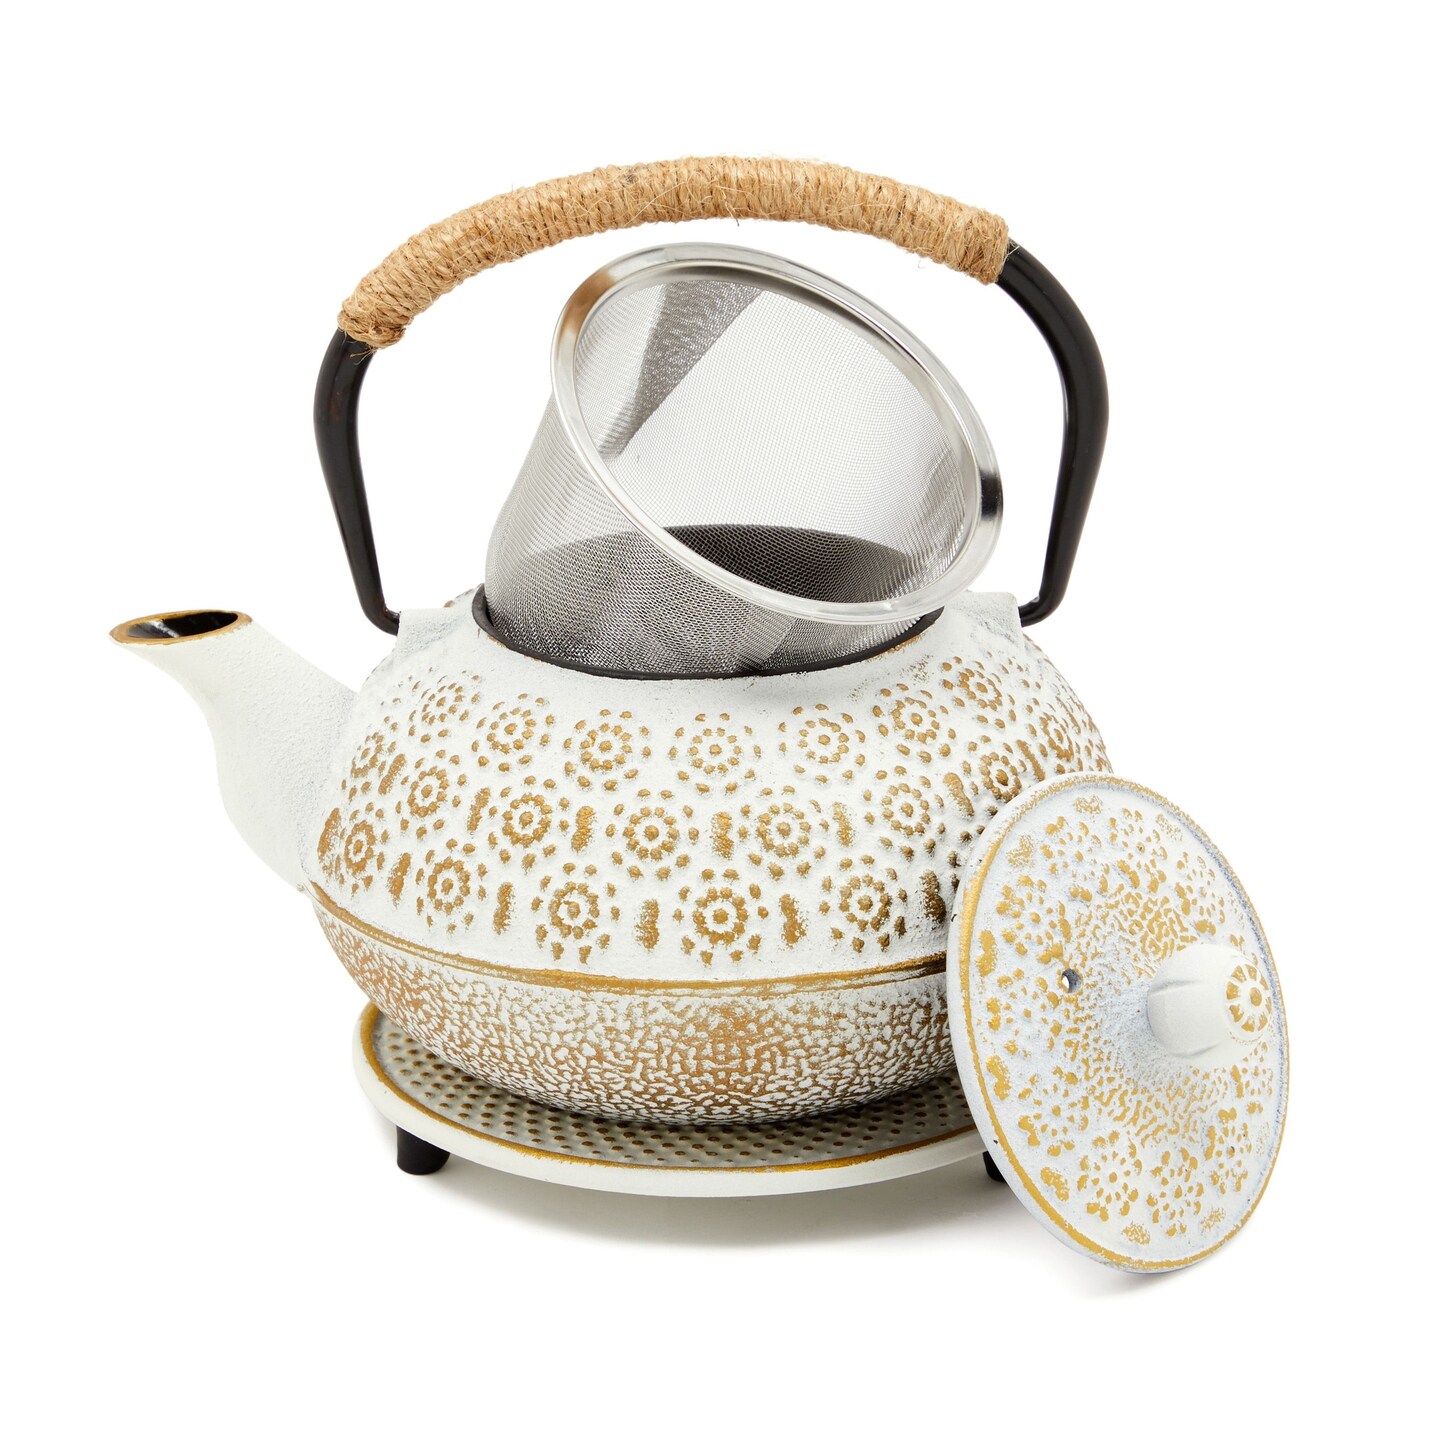 Cast Iron Teapot: Discover the Japanese Tetsubin